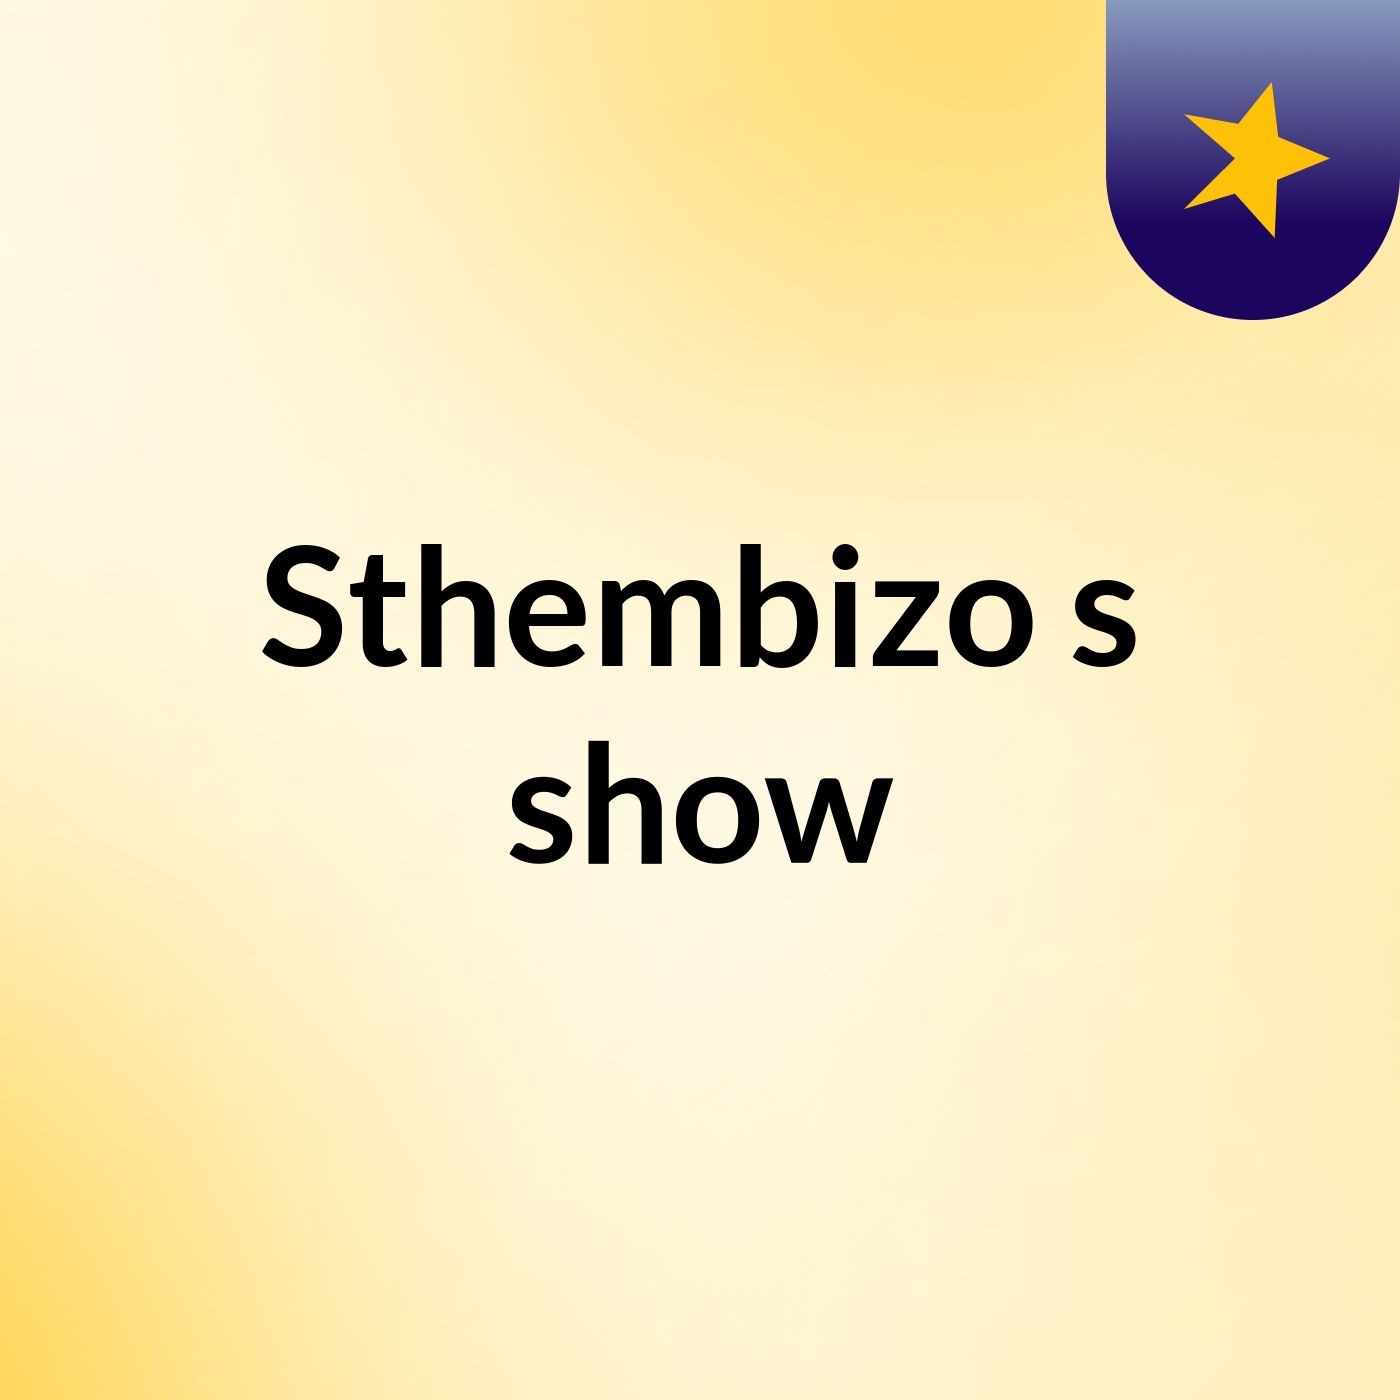 Sthembizo's show